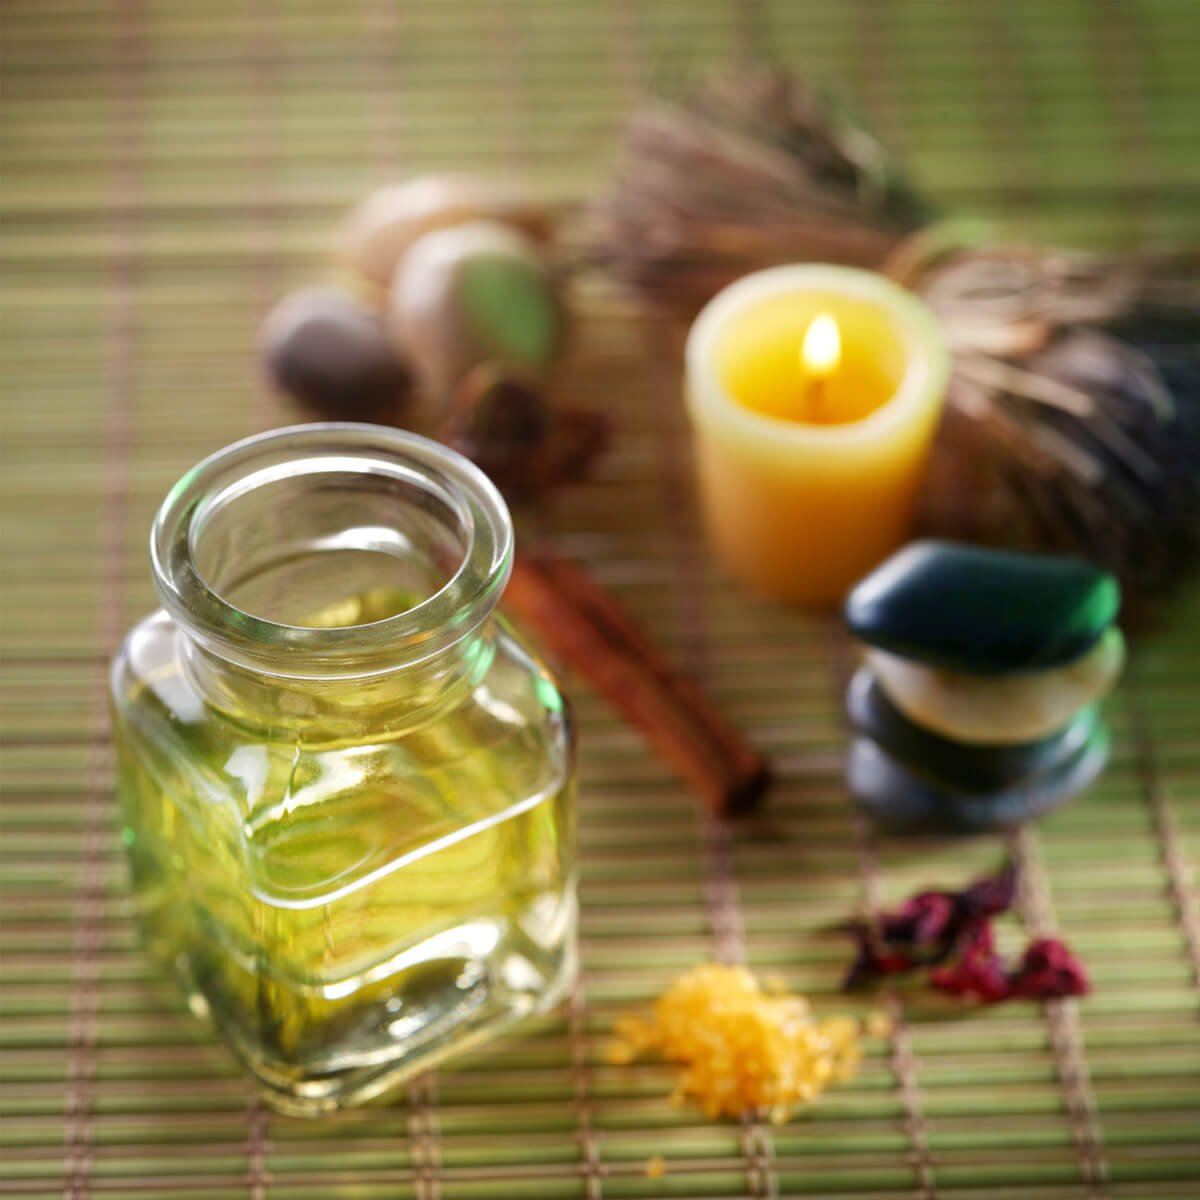 Ayurvedic, Herbal Oils and Cosmetics